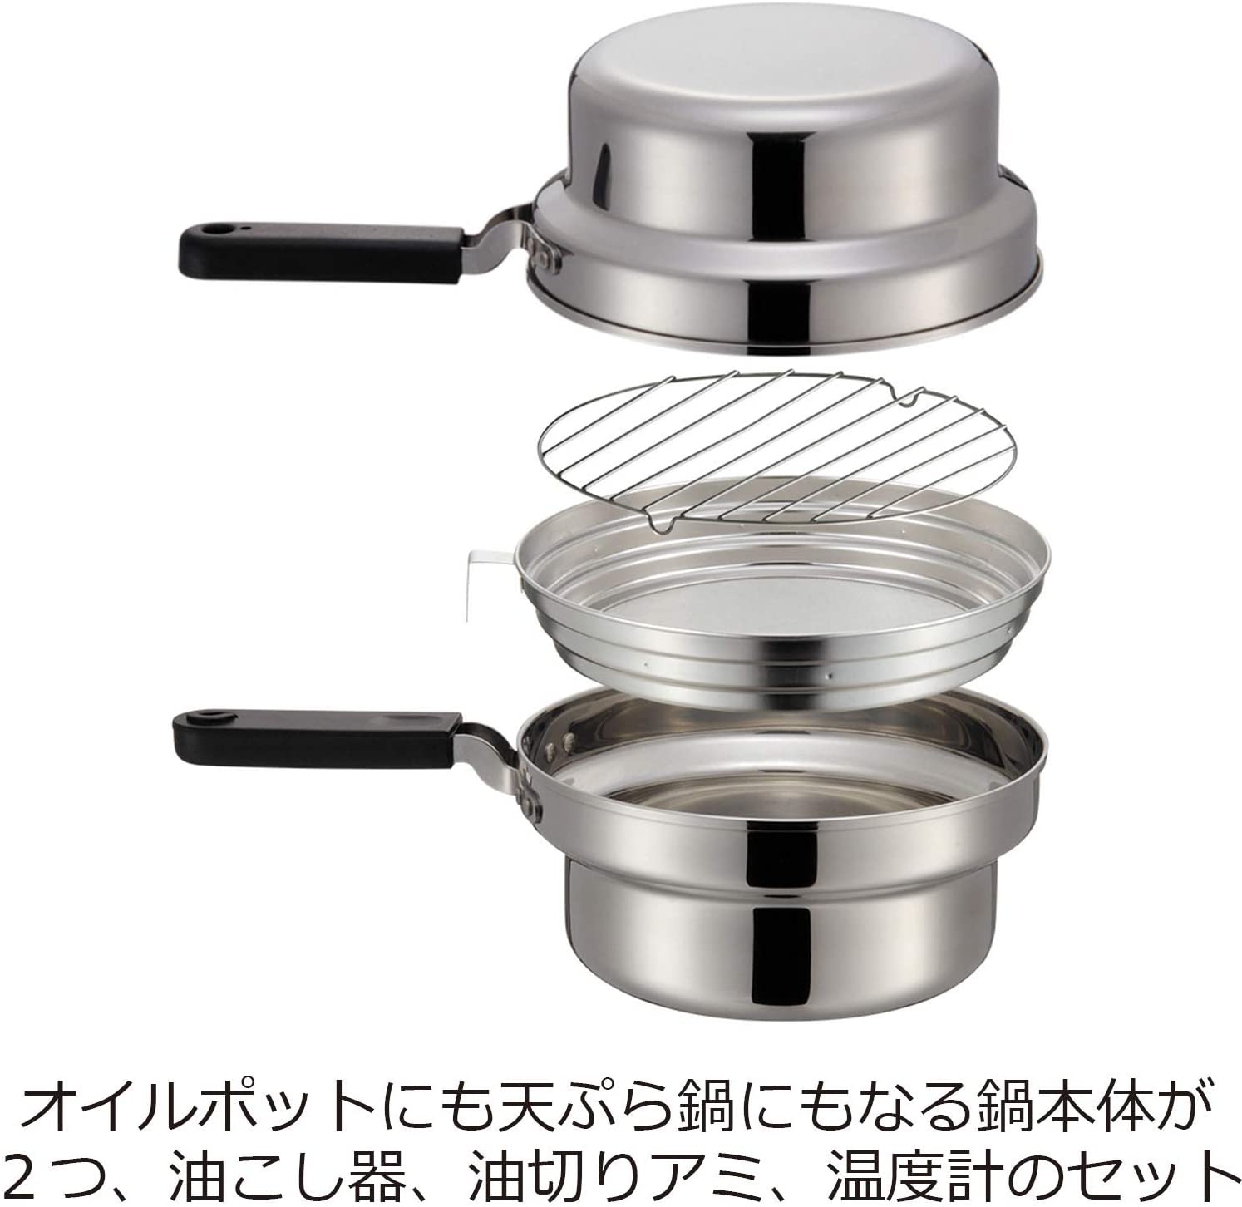 AUX(オークス) 日本製 IH対応 片付け簡単 天ぷら鍋セット オイルポット 温度計付 シルバー T23の商品画像サムネ5 